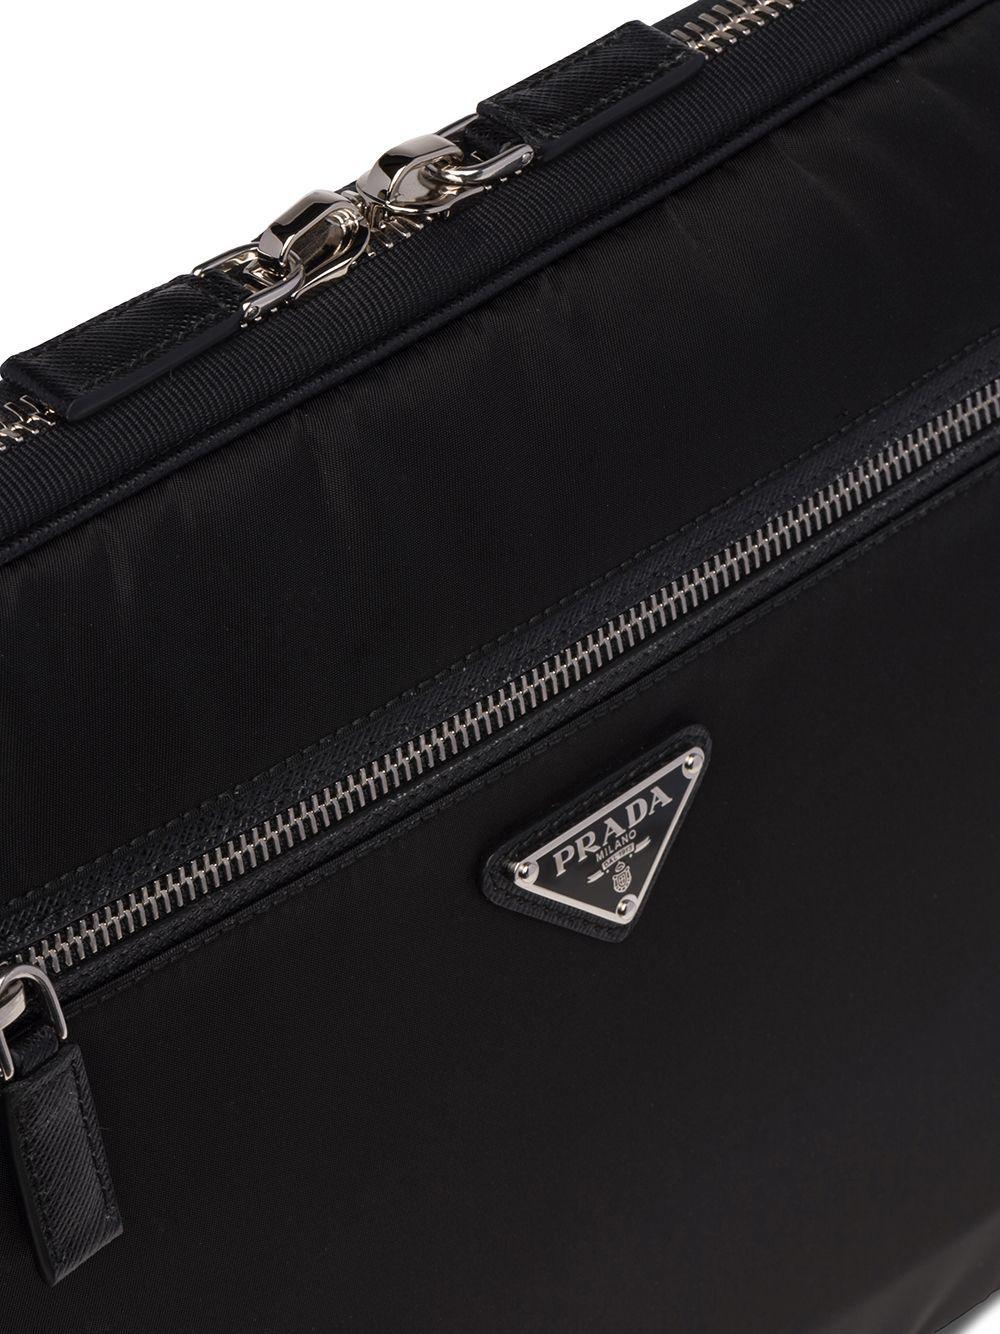 Prada Black Saffiano Leather Laptop Bag